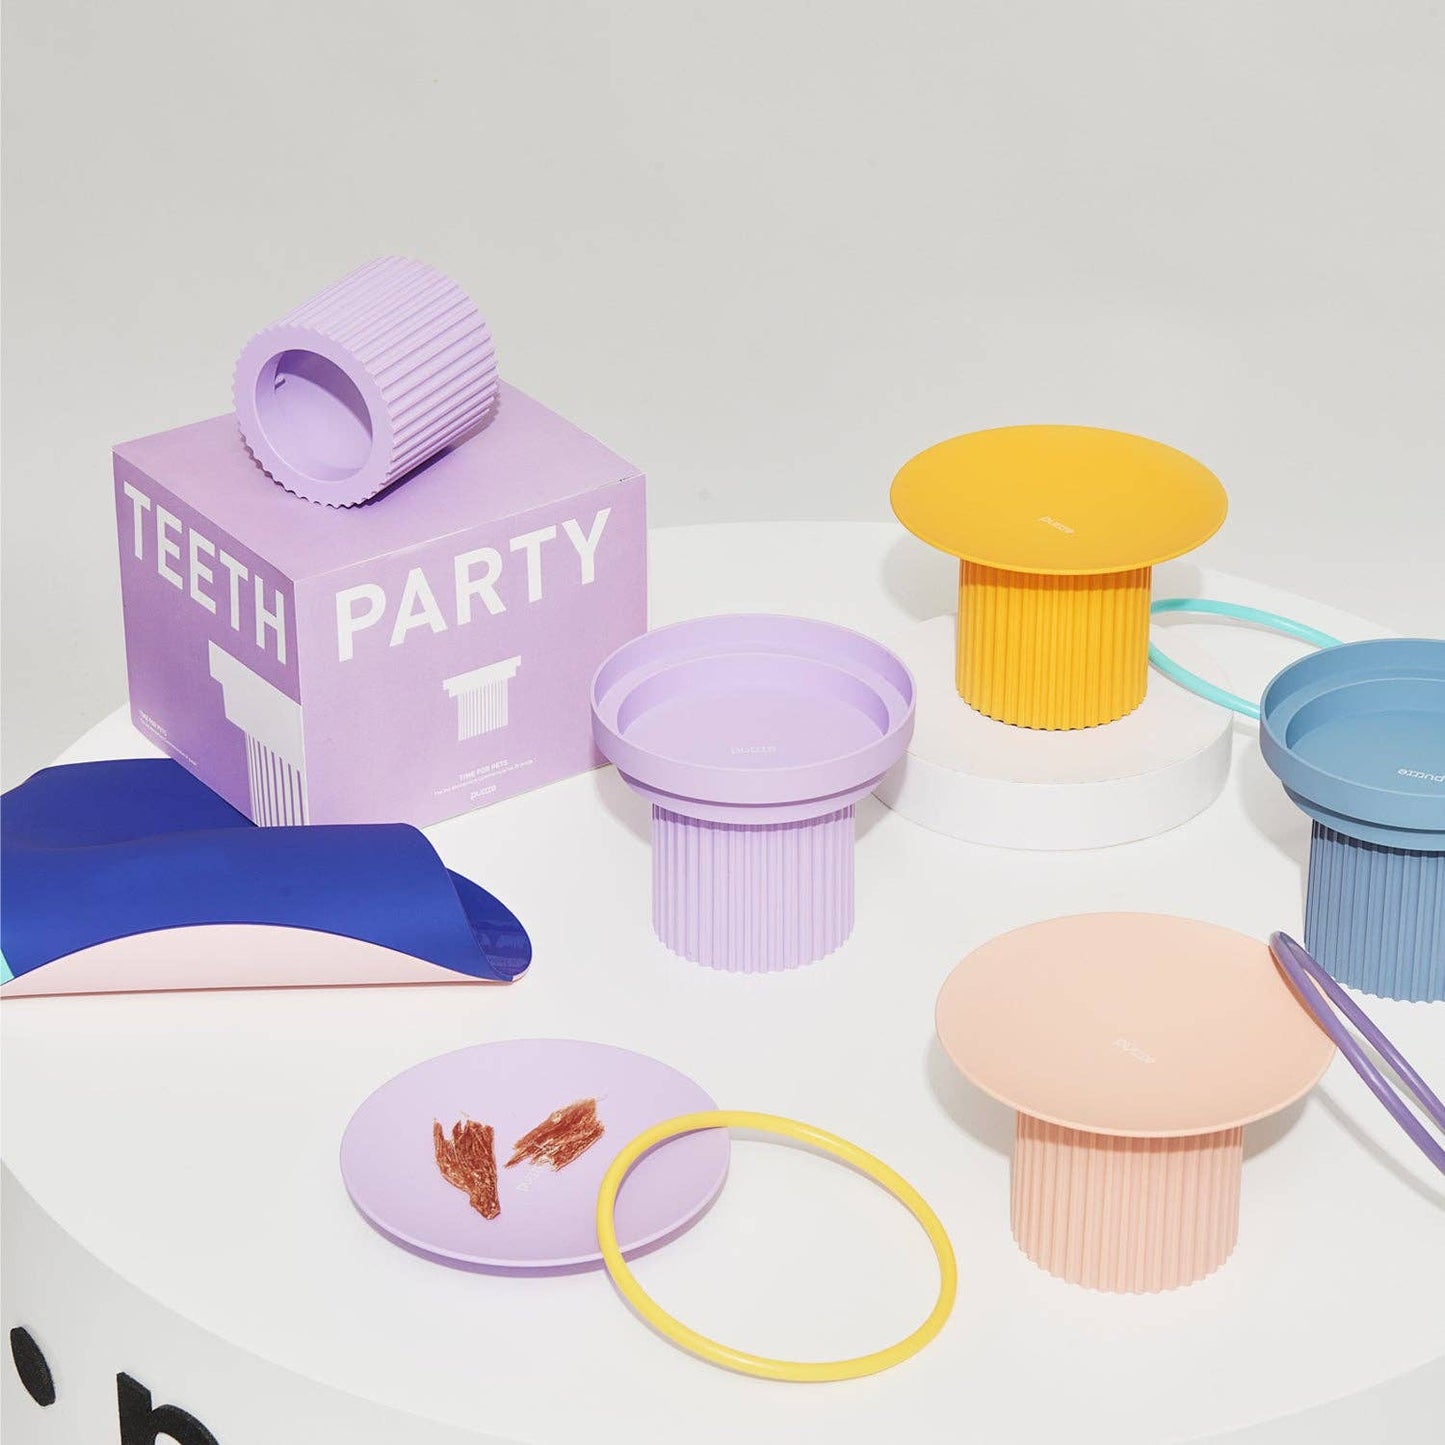 Teeth Party Elevated Feeders: Teeth Party Bowl / Ultra Violet